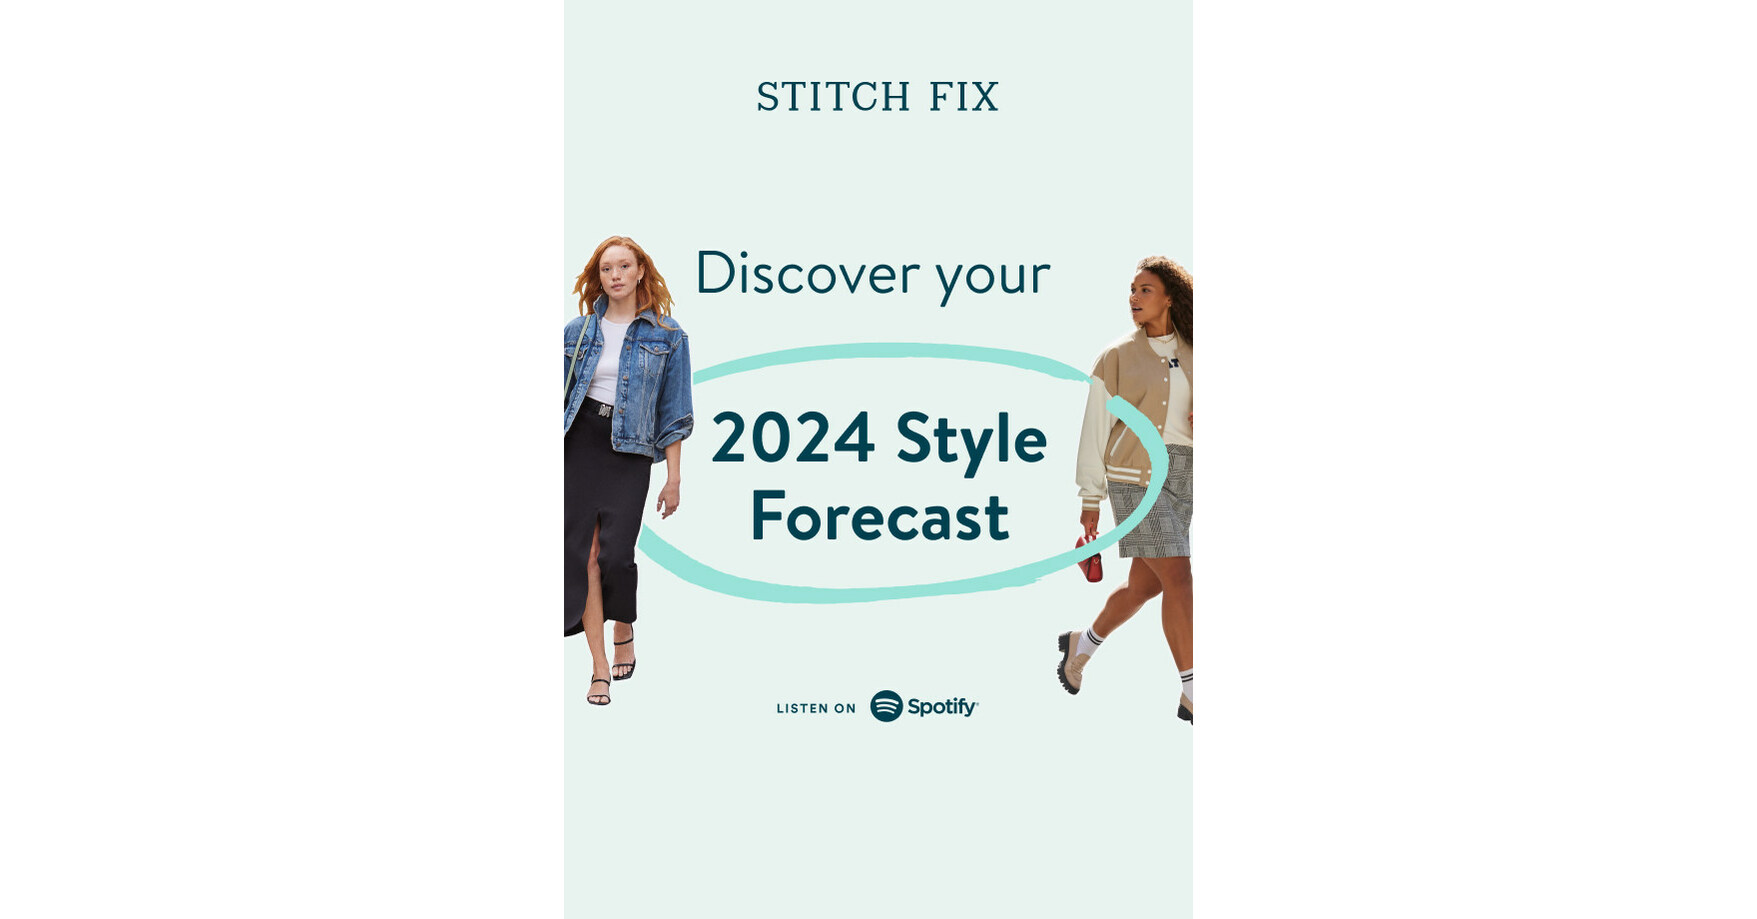 Stitch Fix Advertising